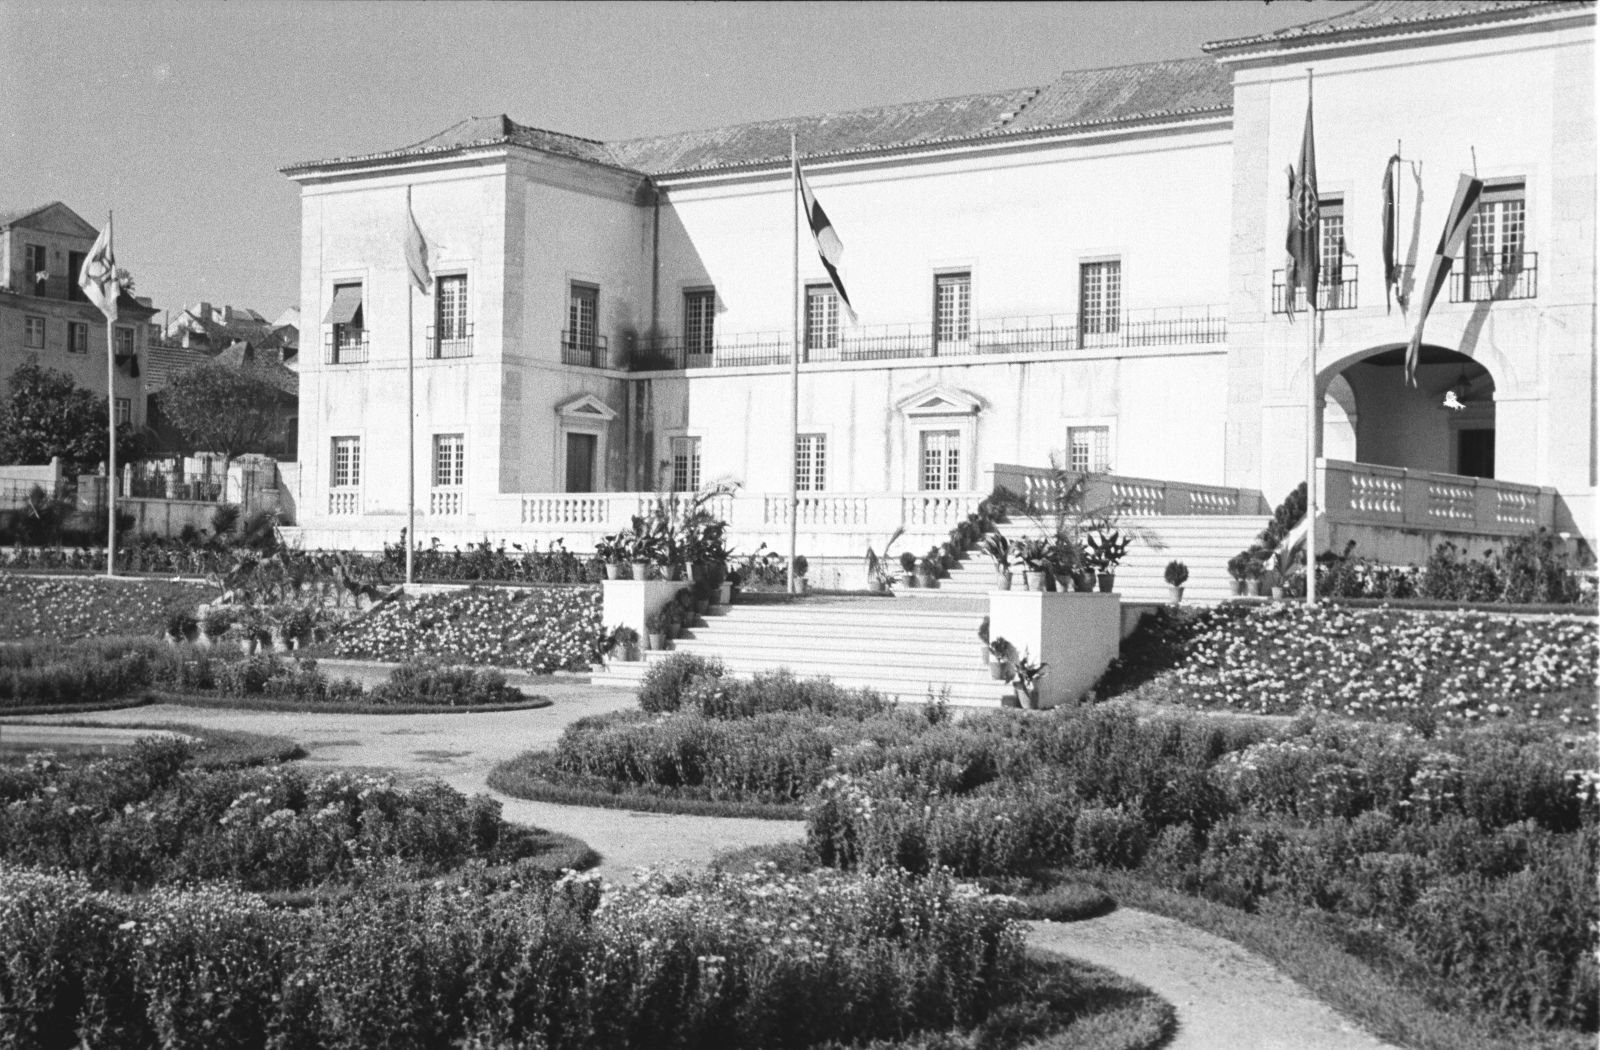 Museu (fachada) e esplanada (jardim), 1951. IICT Photography Collection, INV. ULISBOA-IICT-JBT-25864